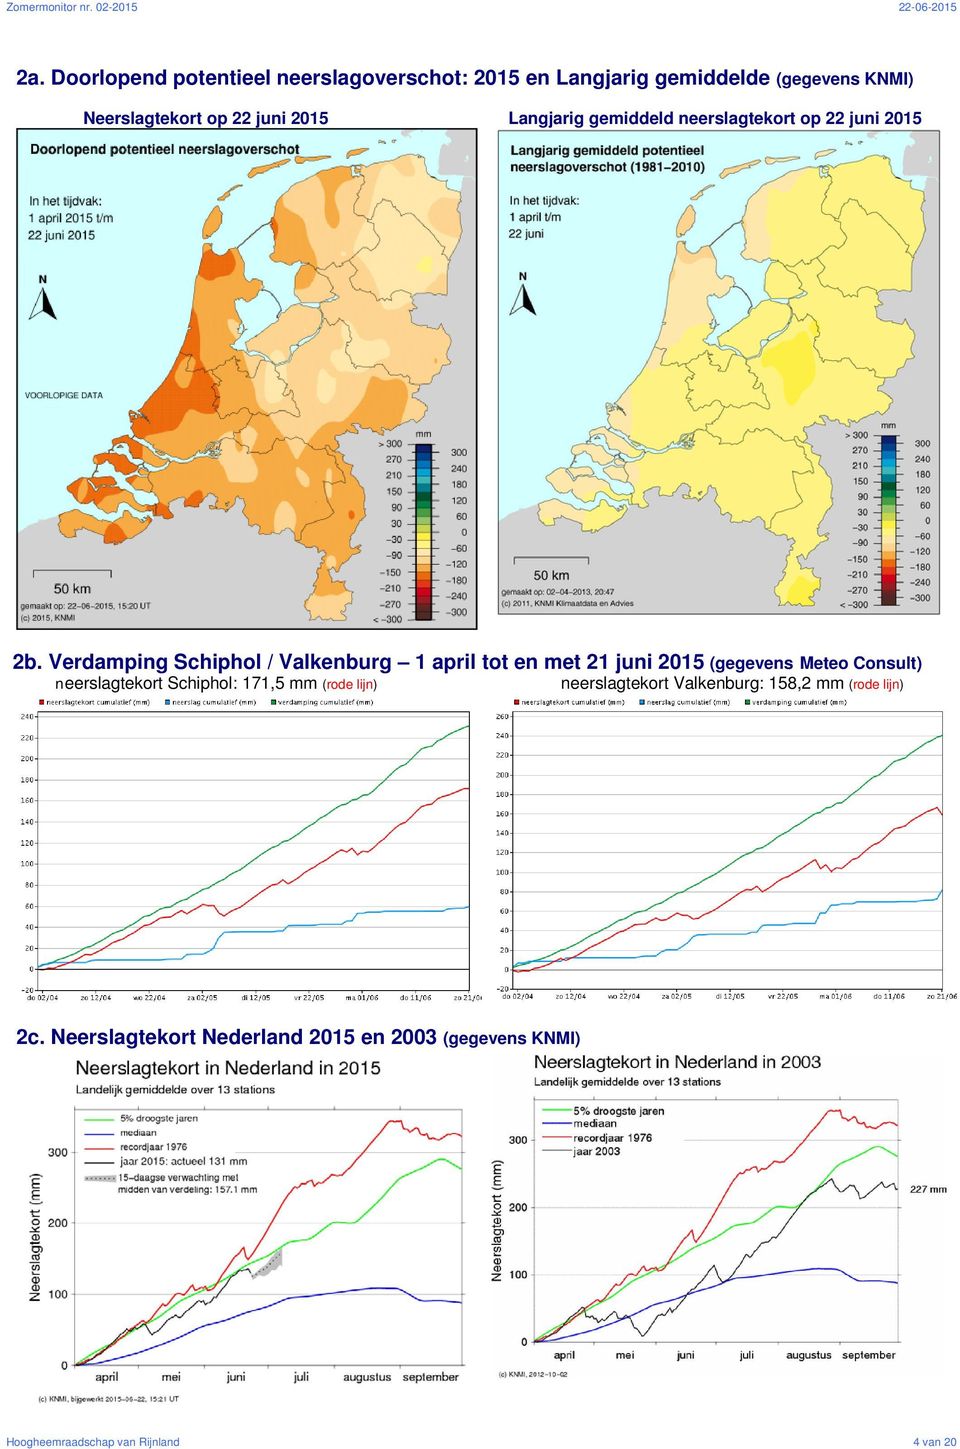 Verdamping Schiphol / Valkenburg 1 april tot en met 21 juni 2015 (gegevens Meteo Consult) neerslagtekort Schiphol: